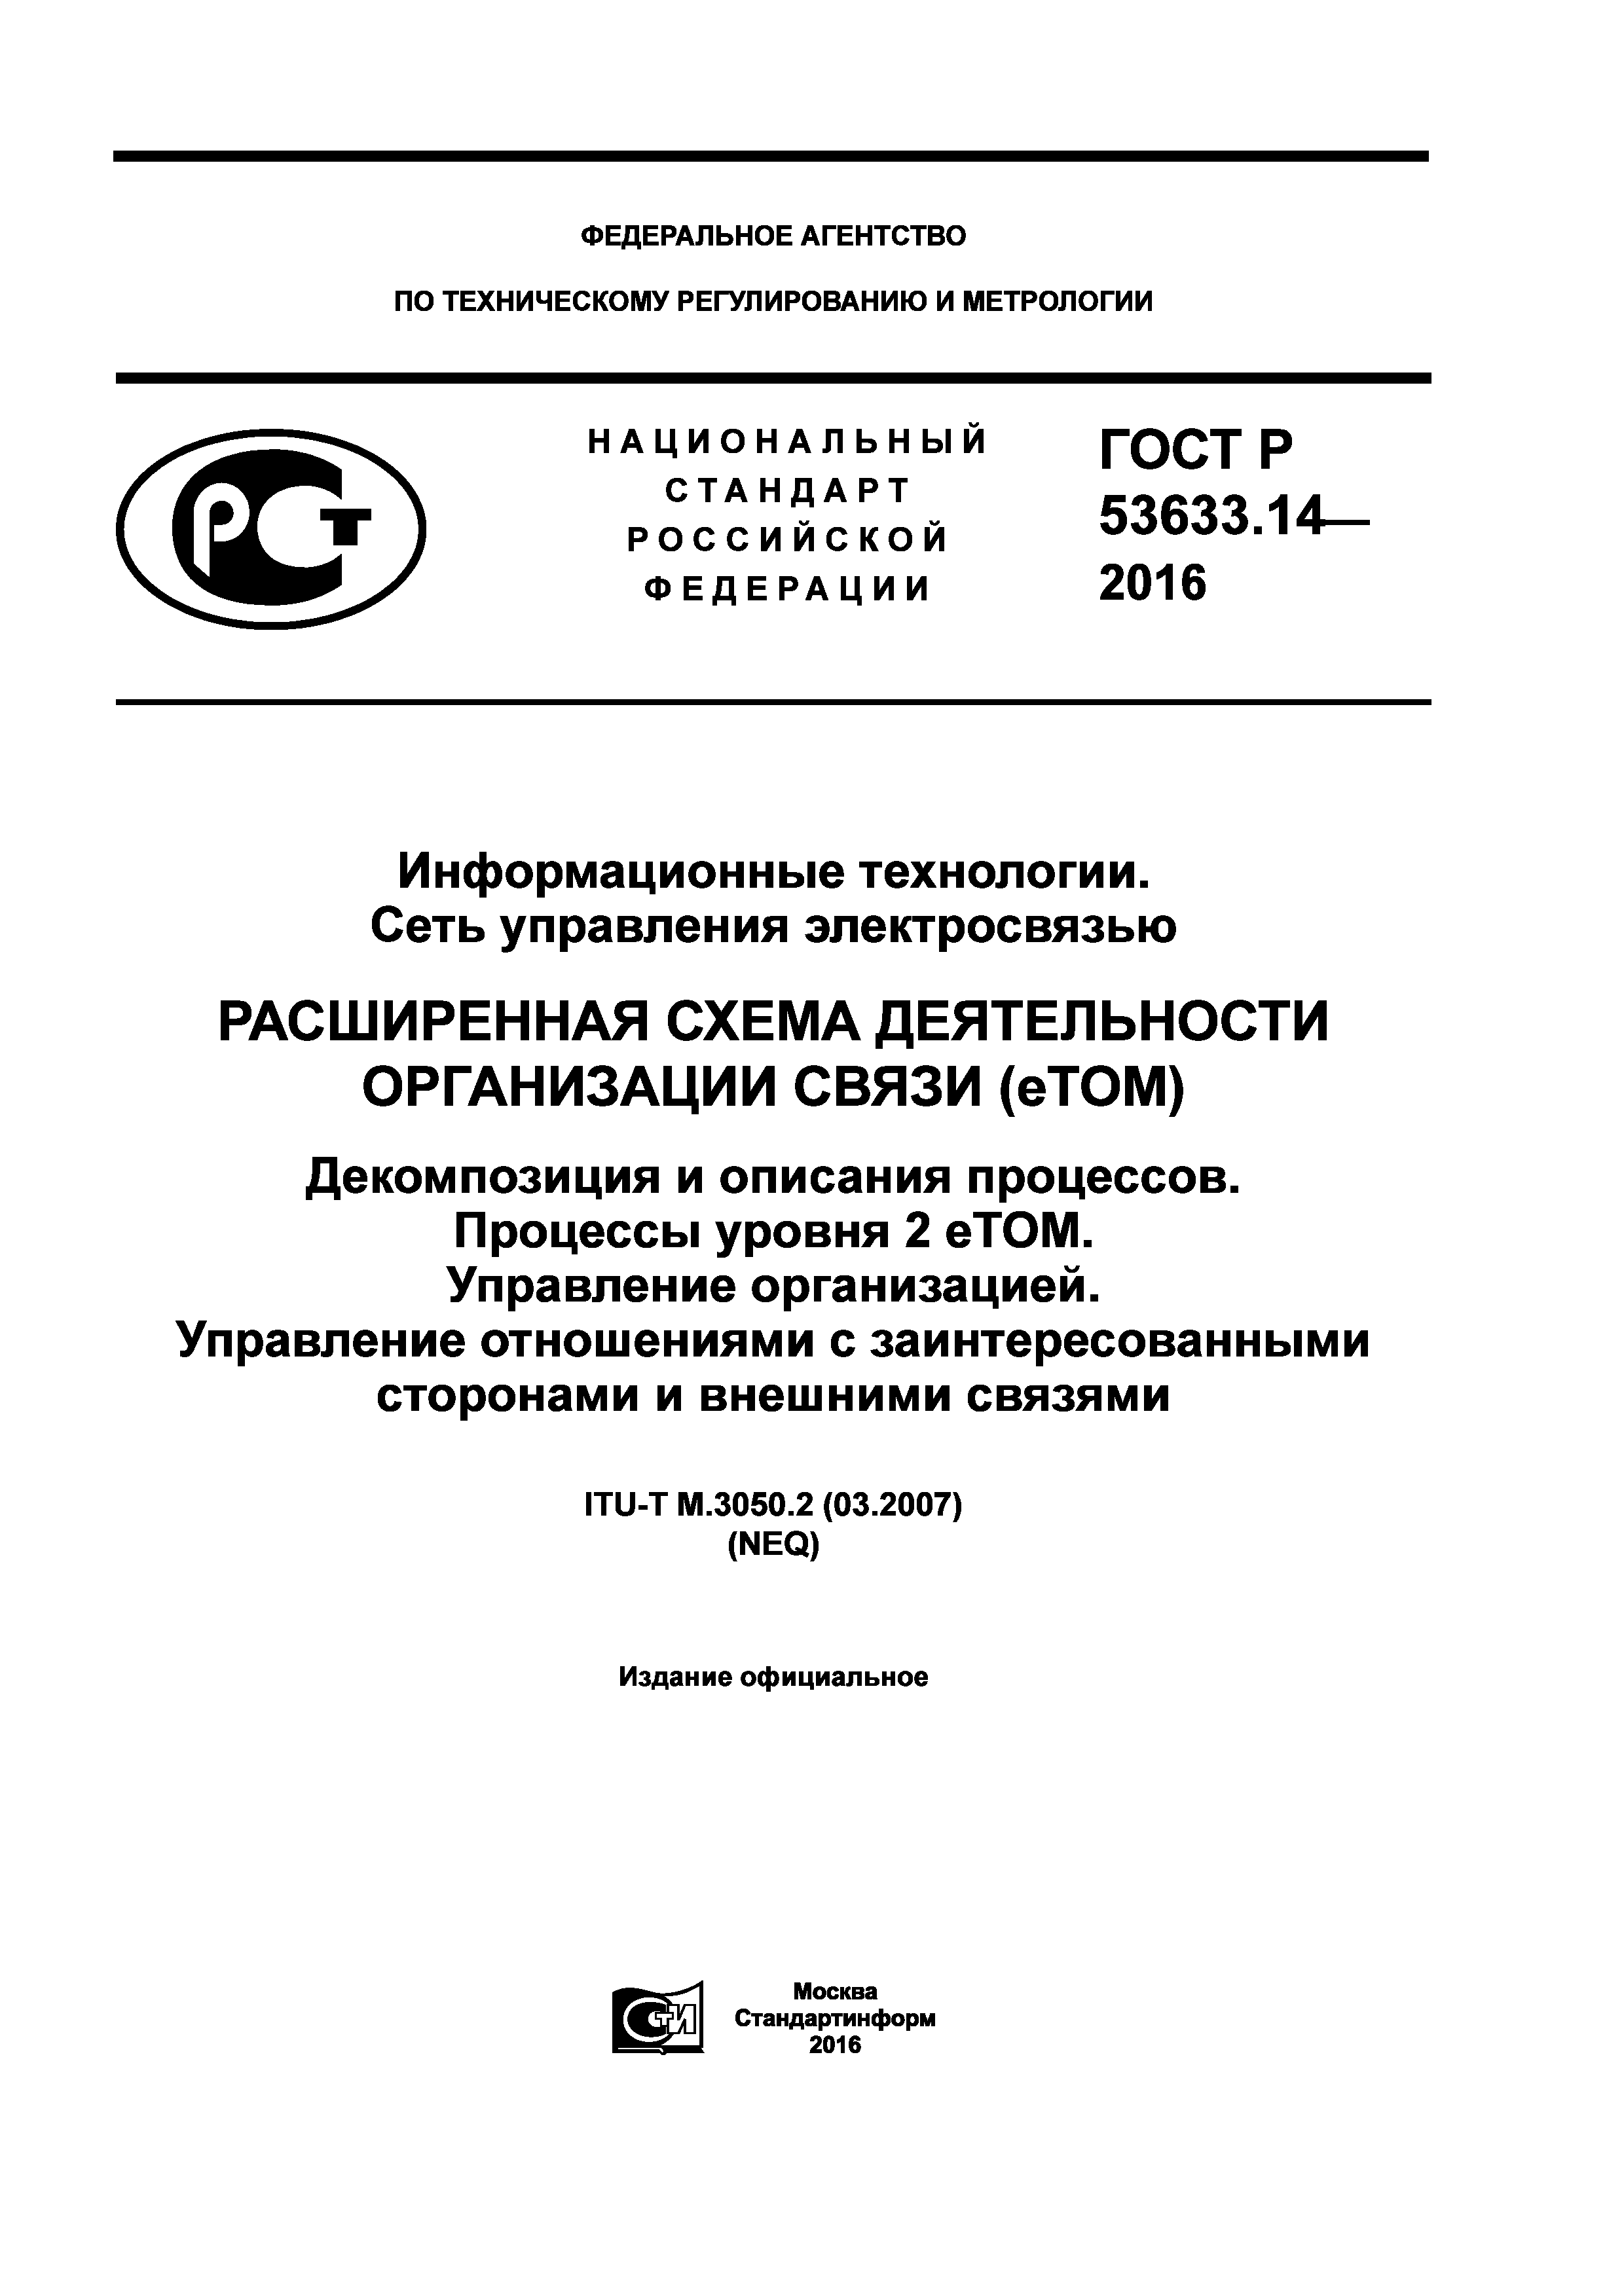 ГОСТ Р 53633.14-2016